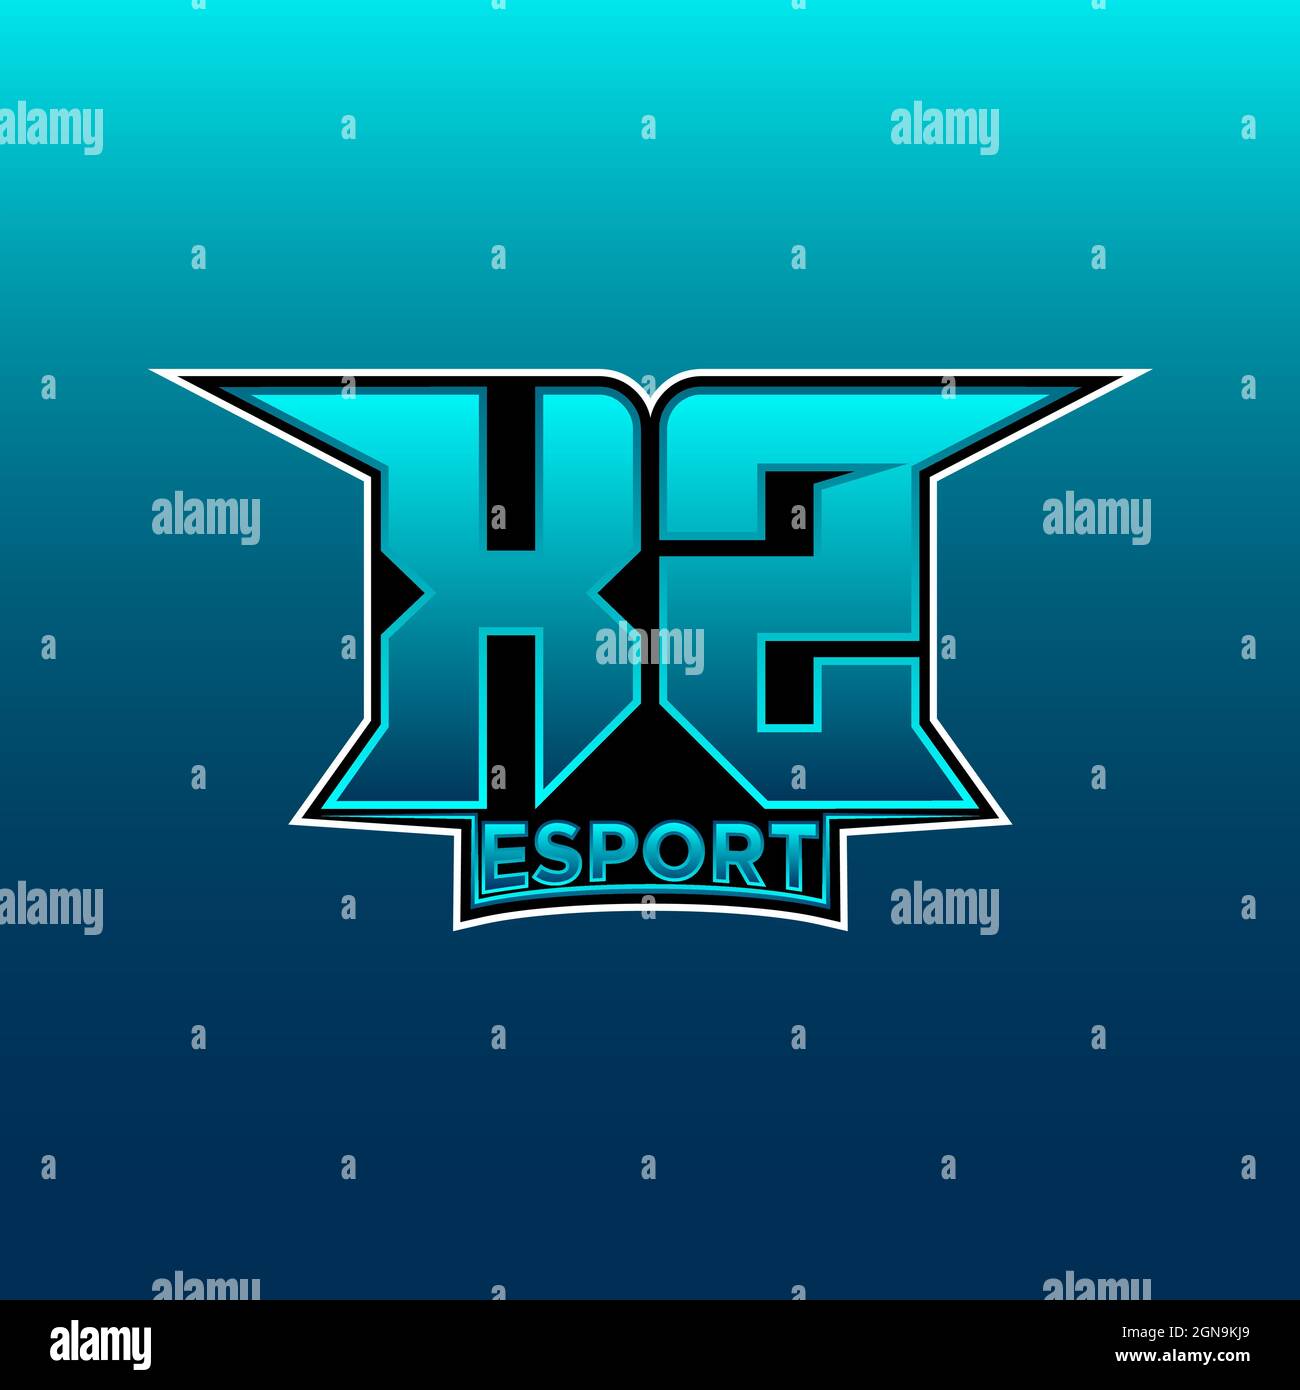 Gaming Logo Ideas: Create Logos for eSports & Clans